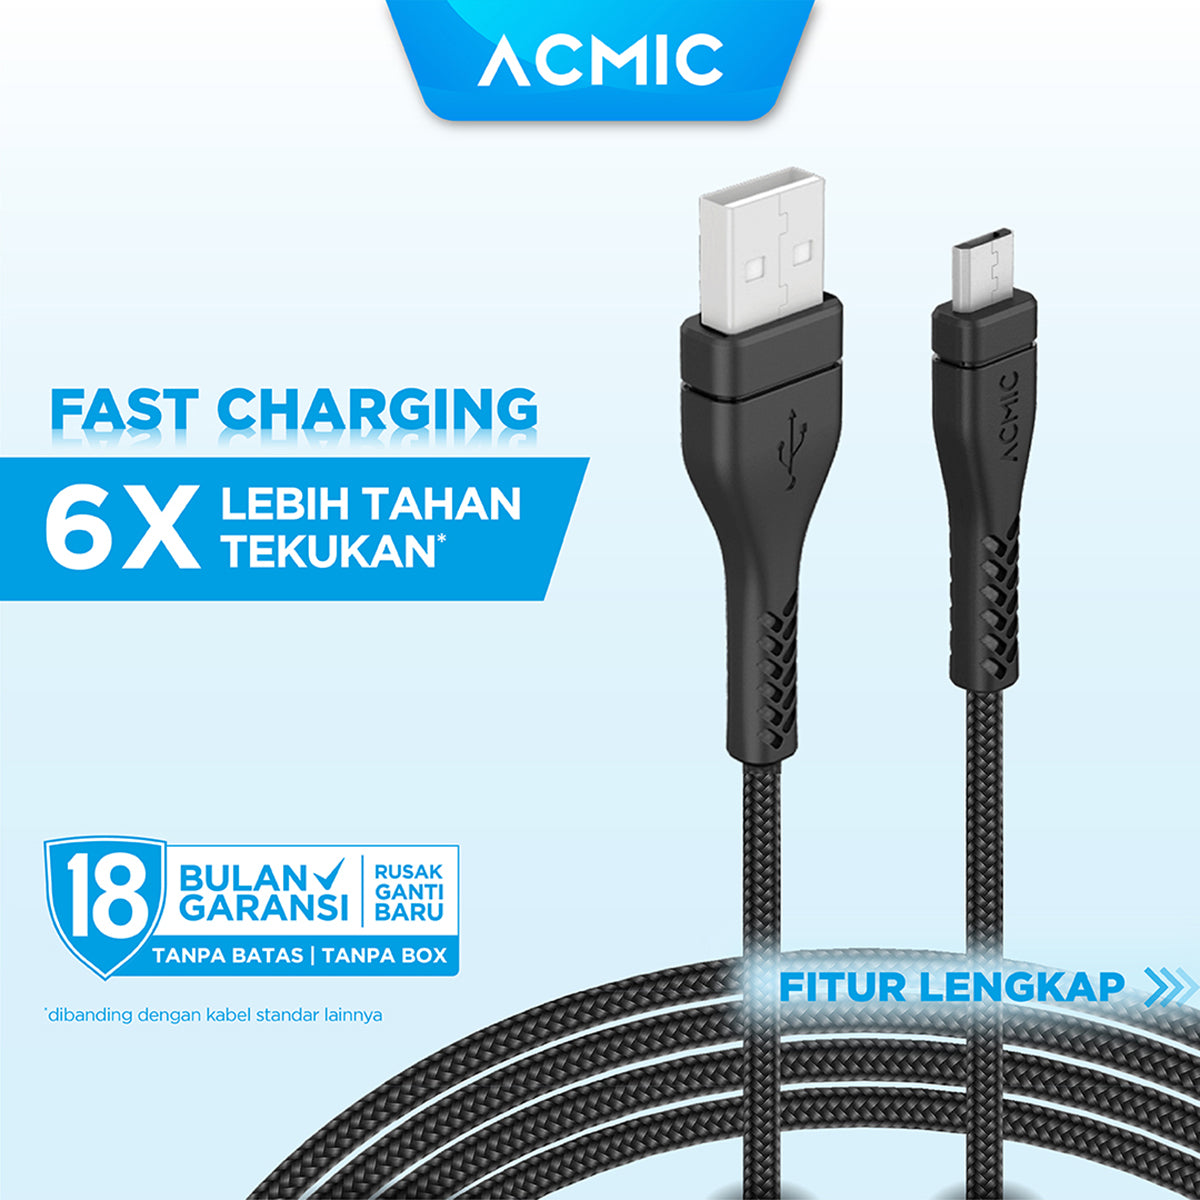 ACMIC B200 B300 Kabel Data Charger Fast Charging 2M / 3M / 2 / 3 meter